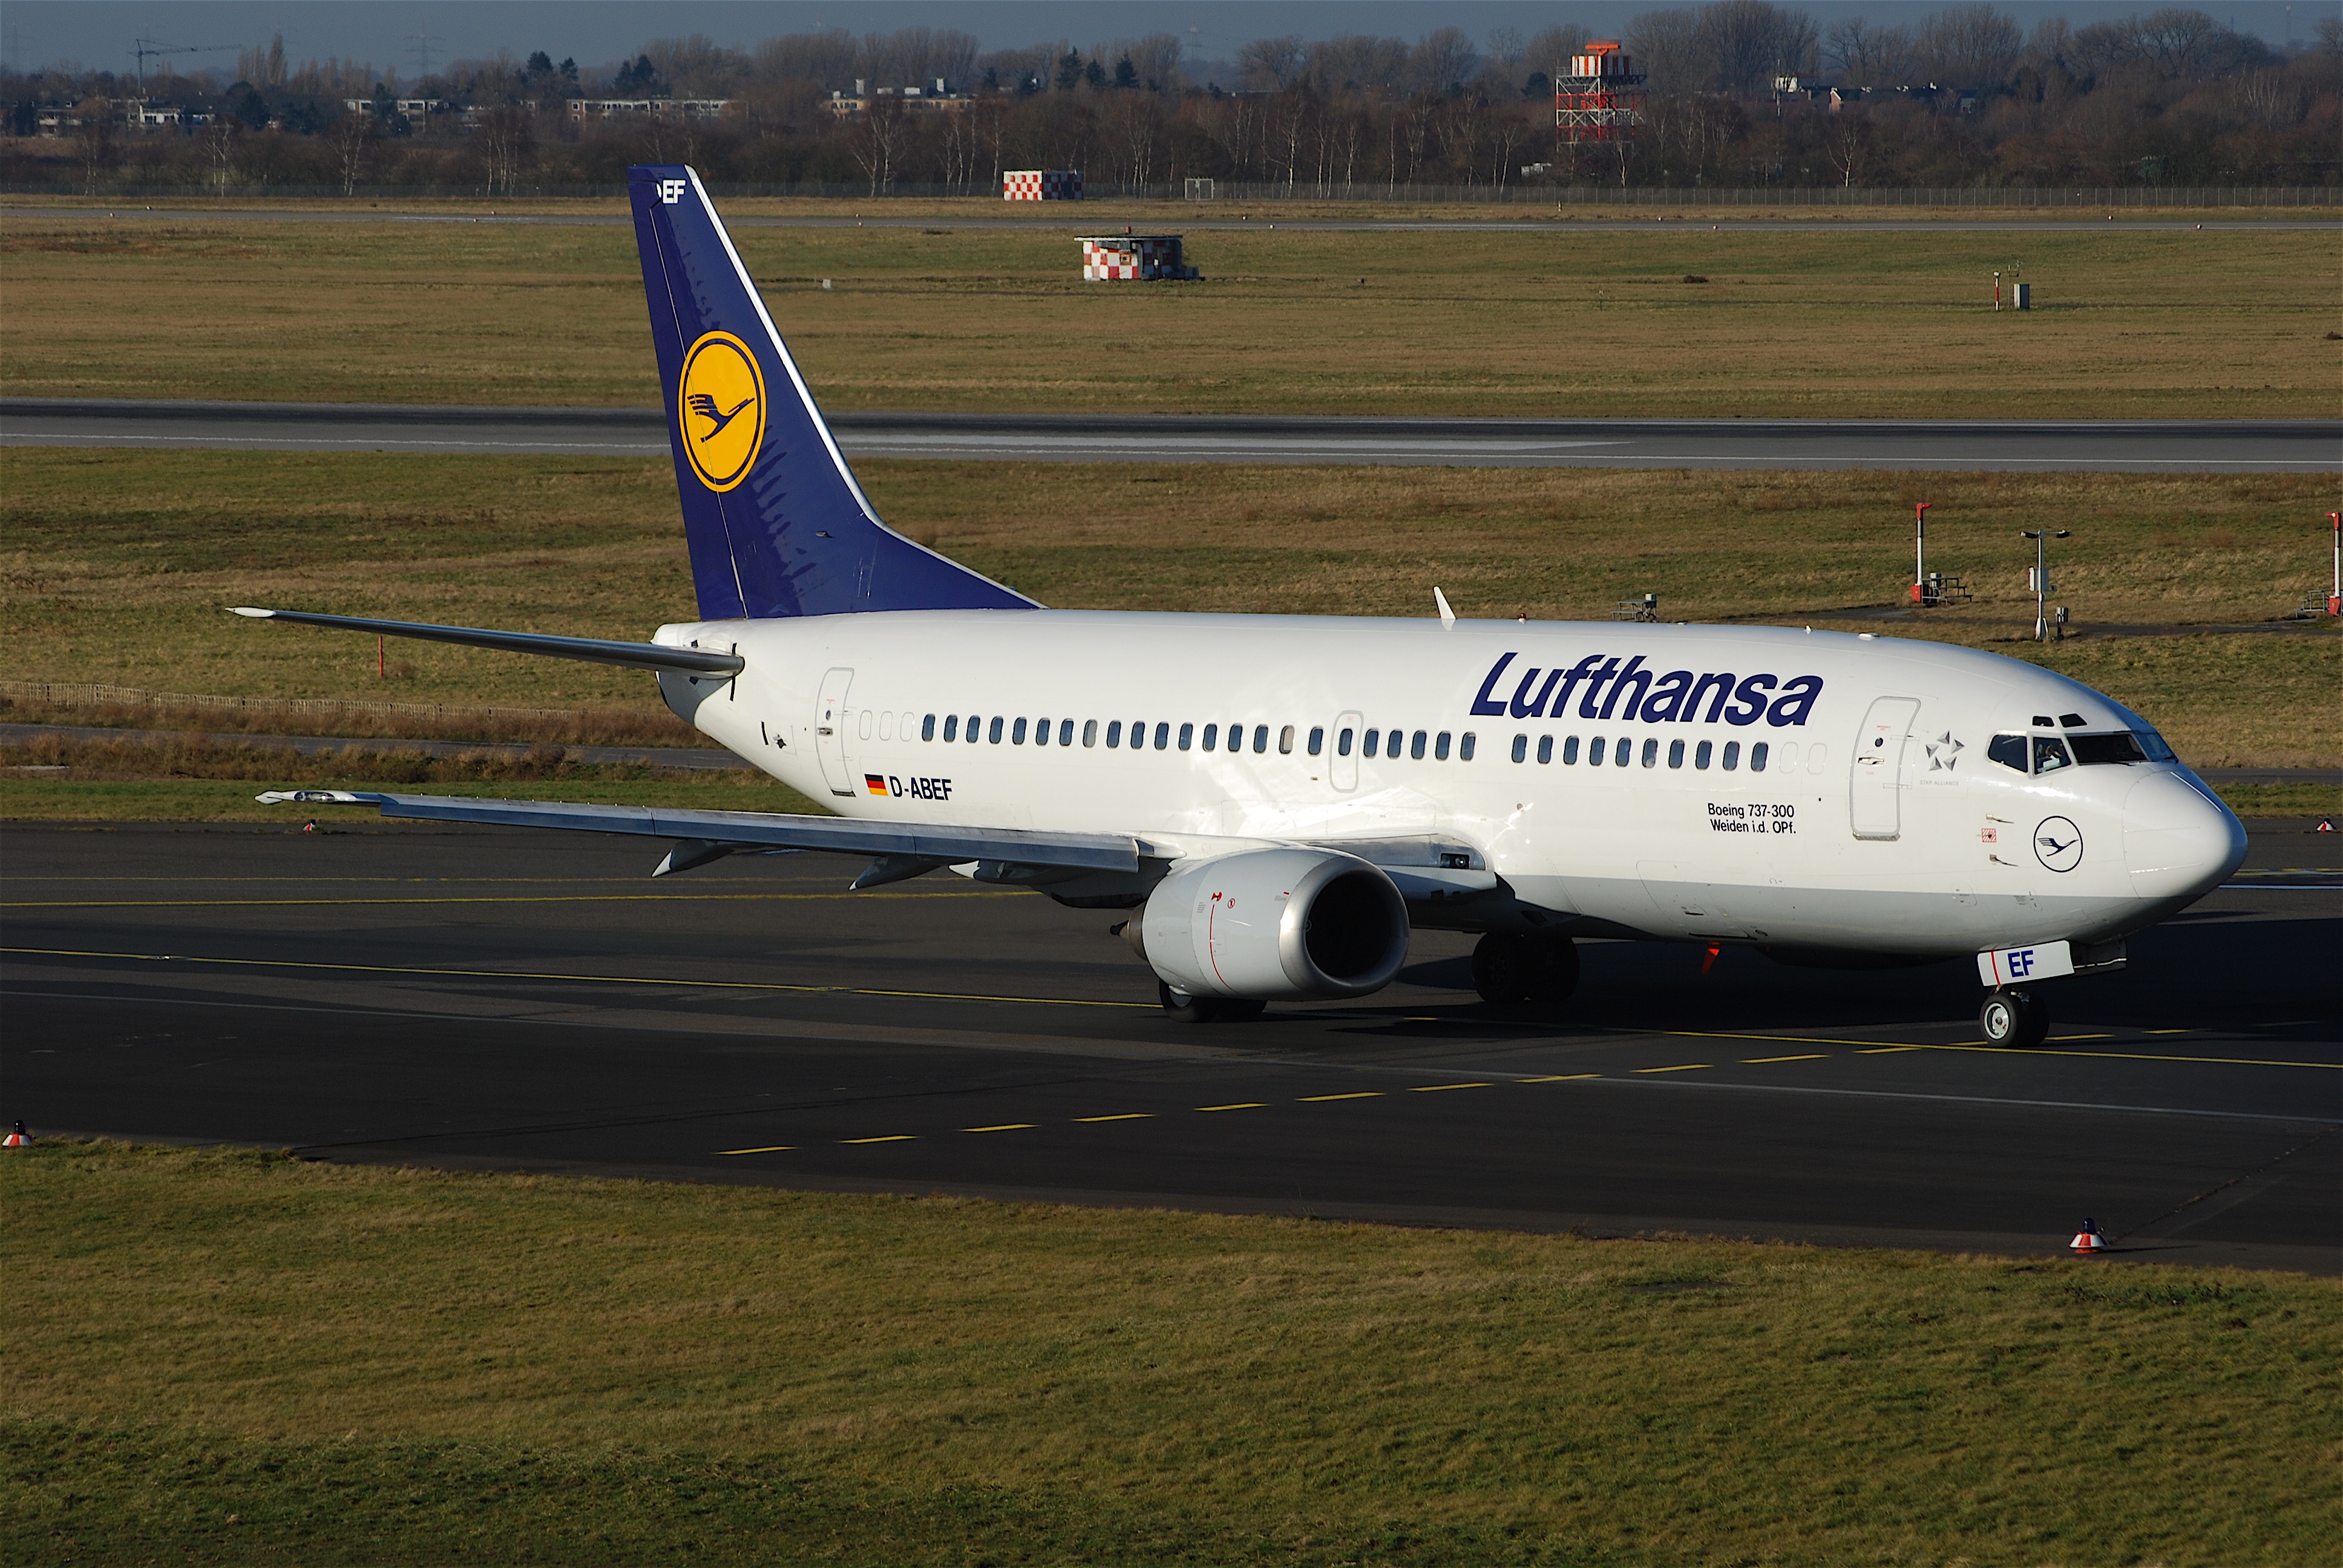 Lufthansa Boeing 737-300, D-ABEF@DUS,13.01.2008-492fx - Flickr - Aero Icarus